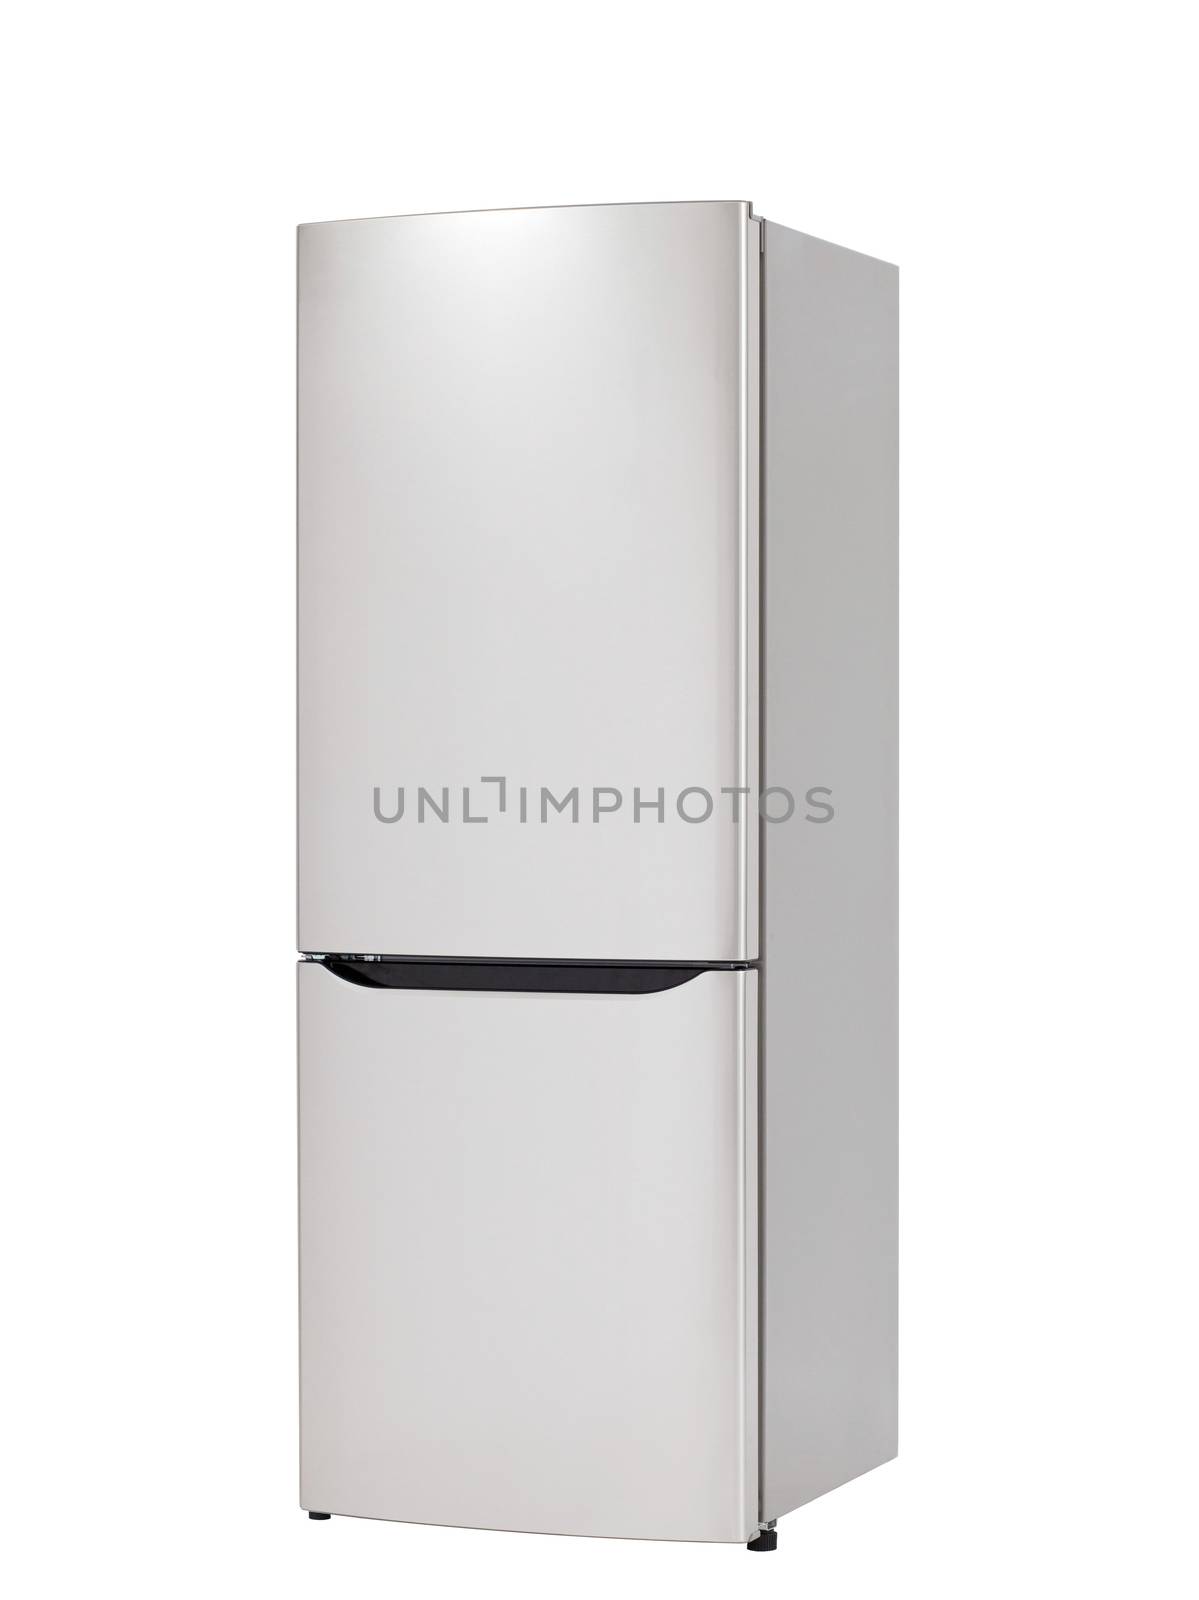 Modern refrigerator isolated on white background